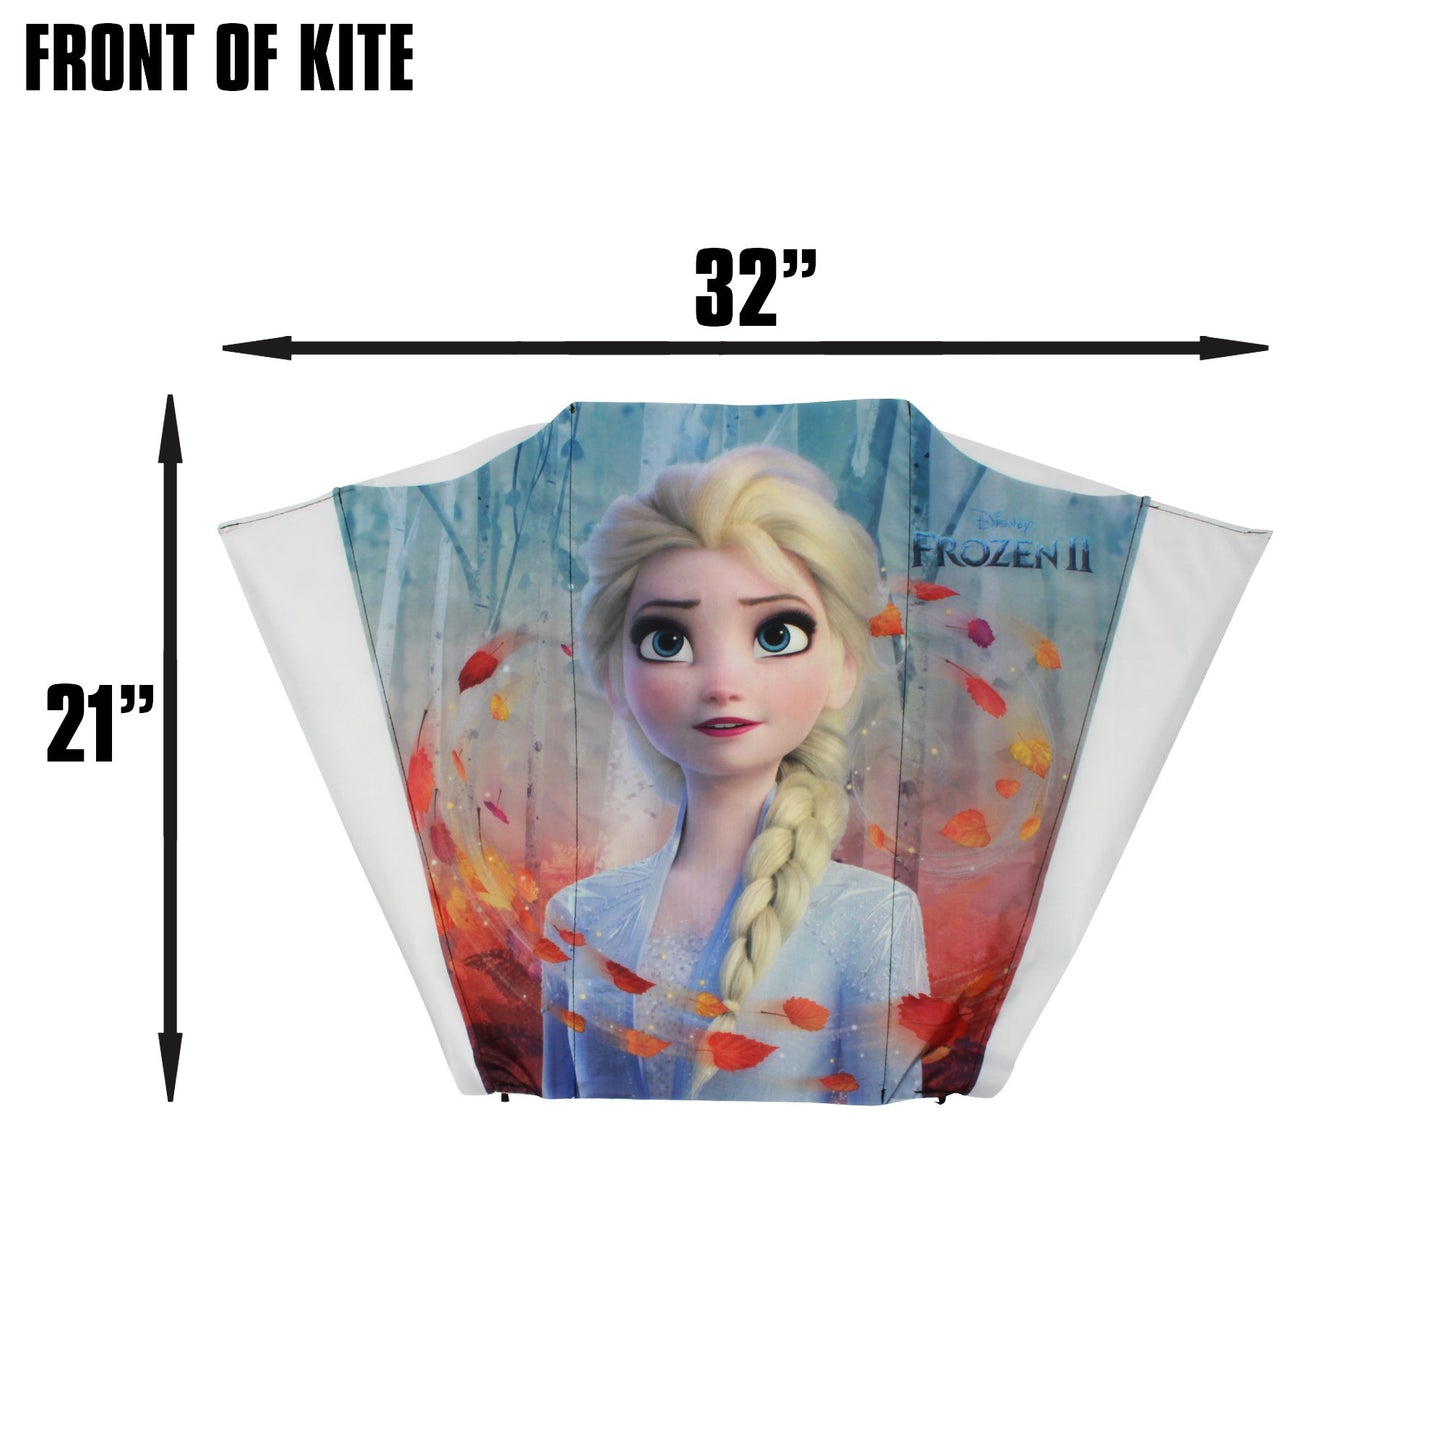 X Kites SuperSled Frozen 2 Nylon Kite dimensions